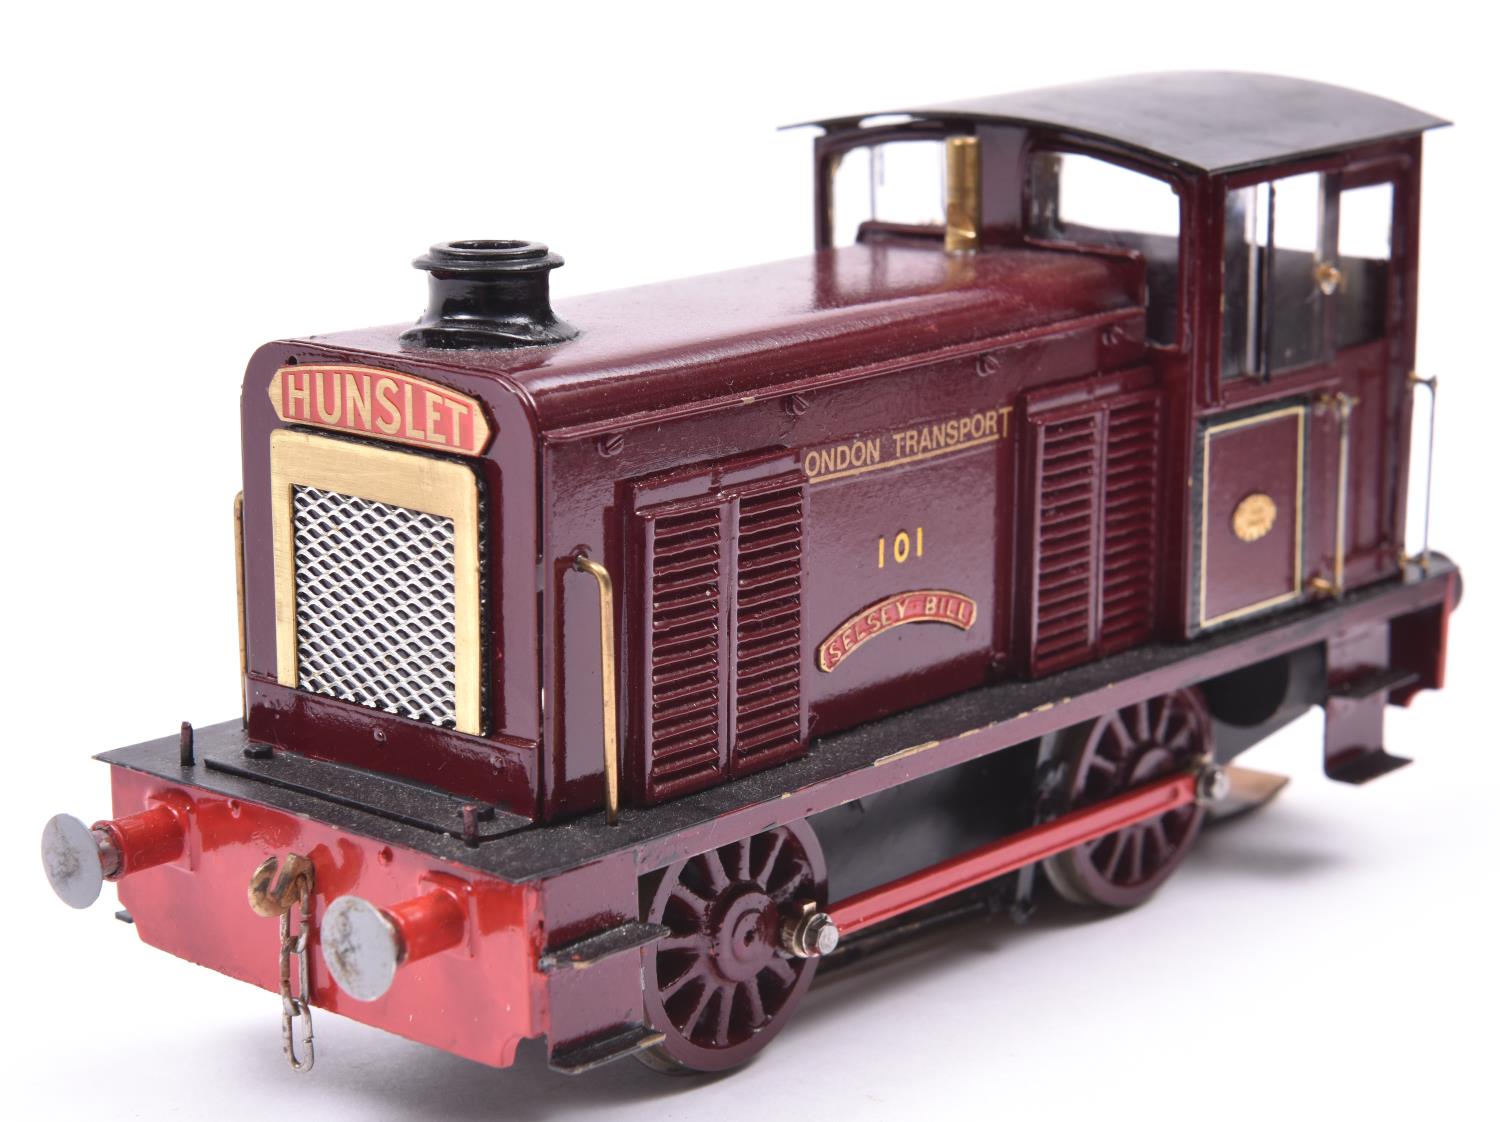 A finescale O gauge kitbuilt brass model of an LT Hunslet 0-4-0 diesel locomotive, Selsey Bill